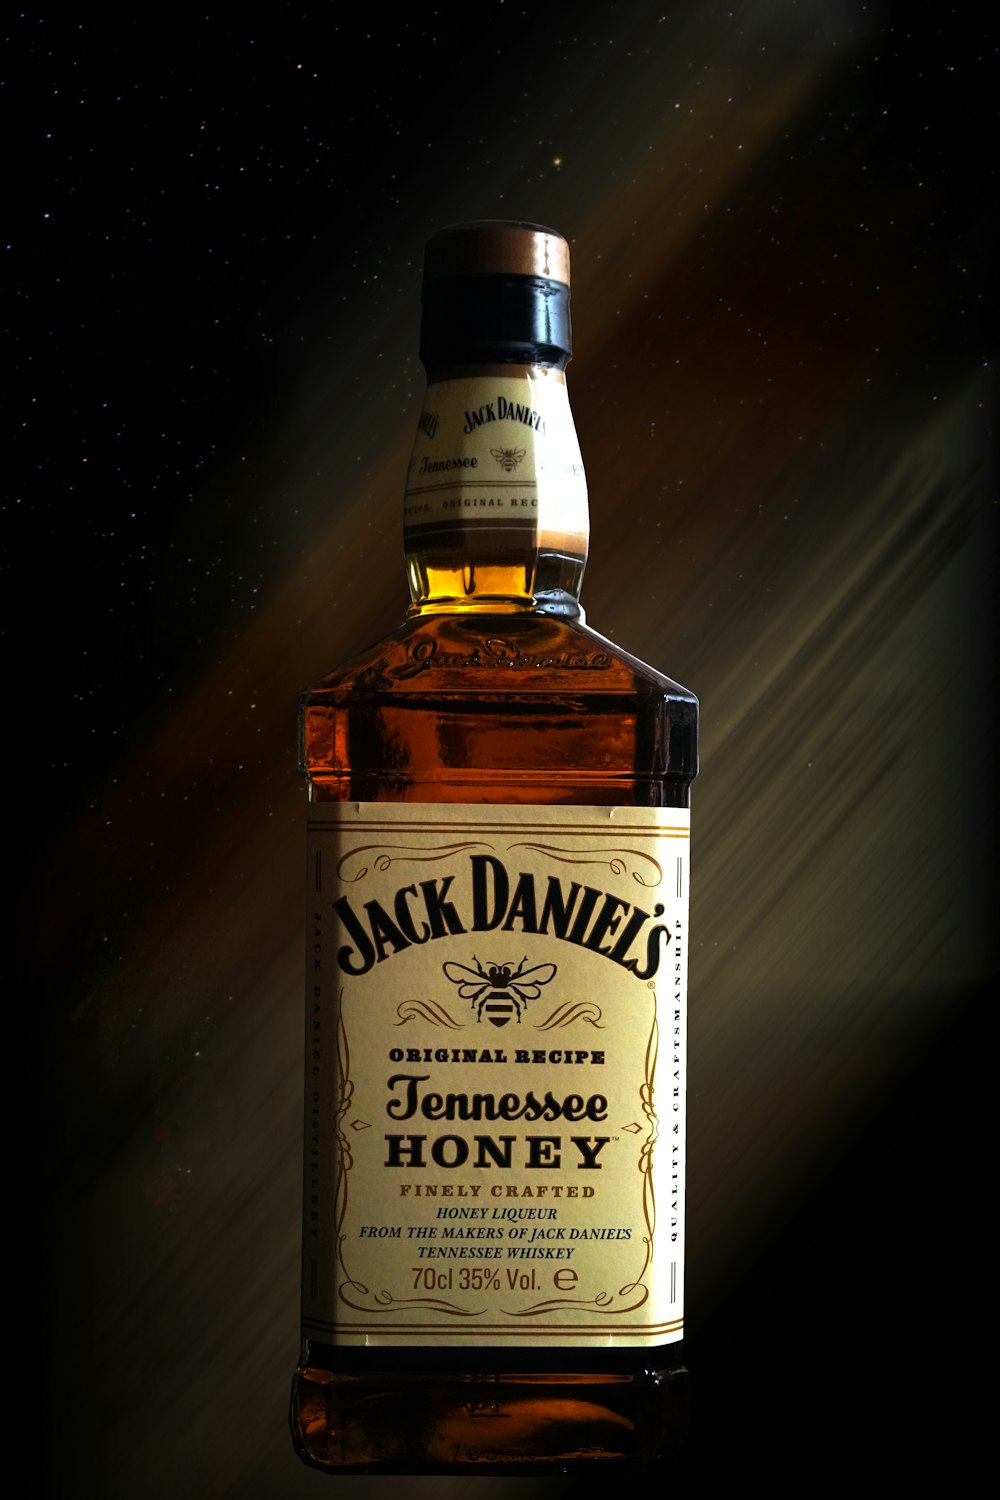 jack daniels old no 7 tennessee honey photo – Free Alcohol Image on Unsplash